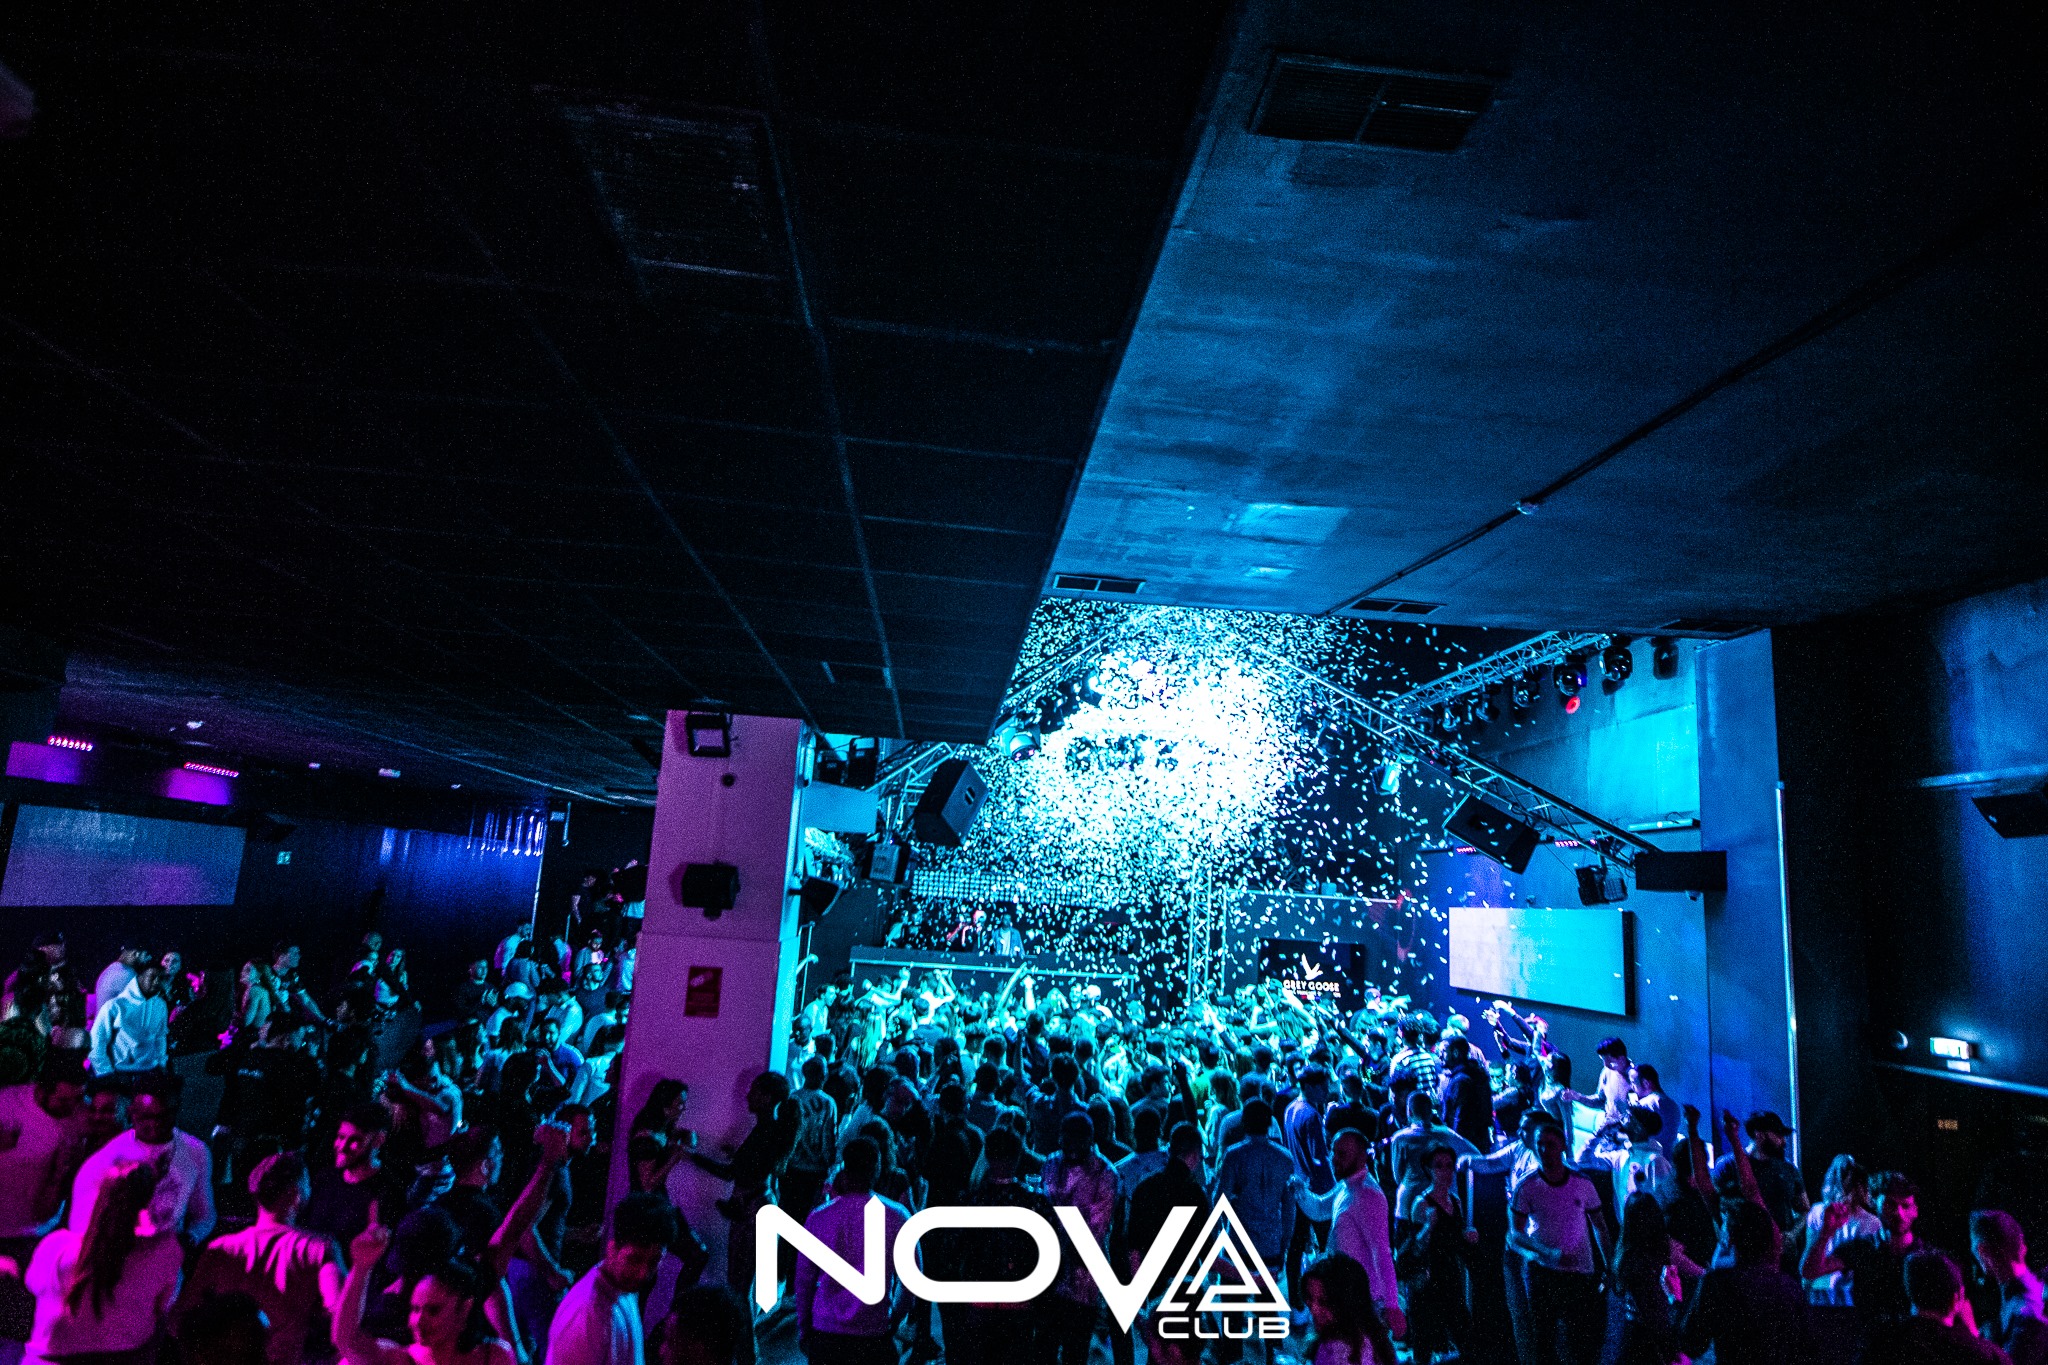 Nova club - Clubbing TV